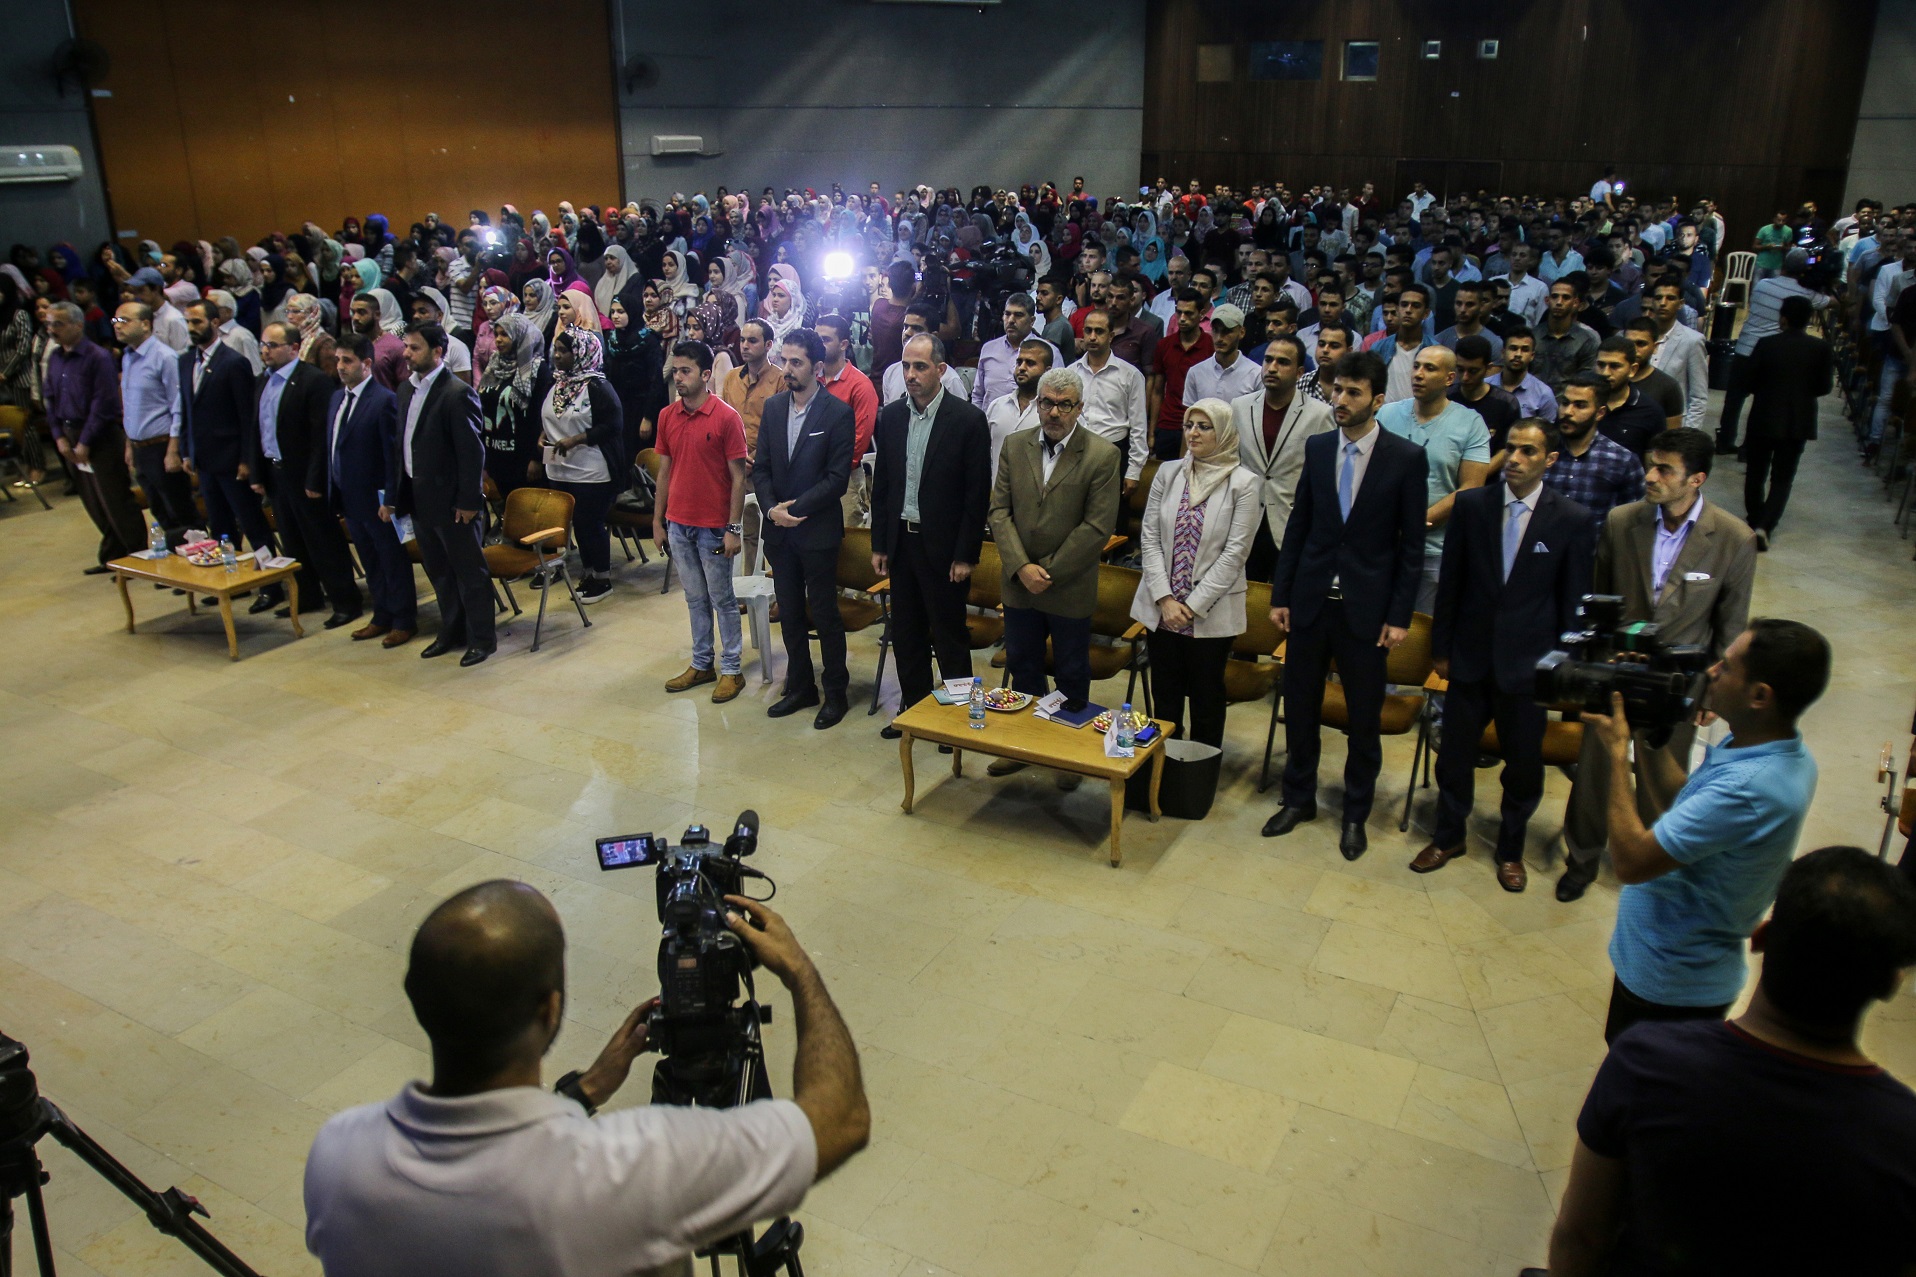 PALMUN Launch its Program Ceremony In Gaza